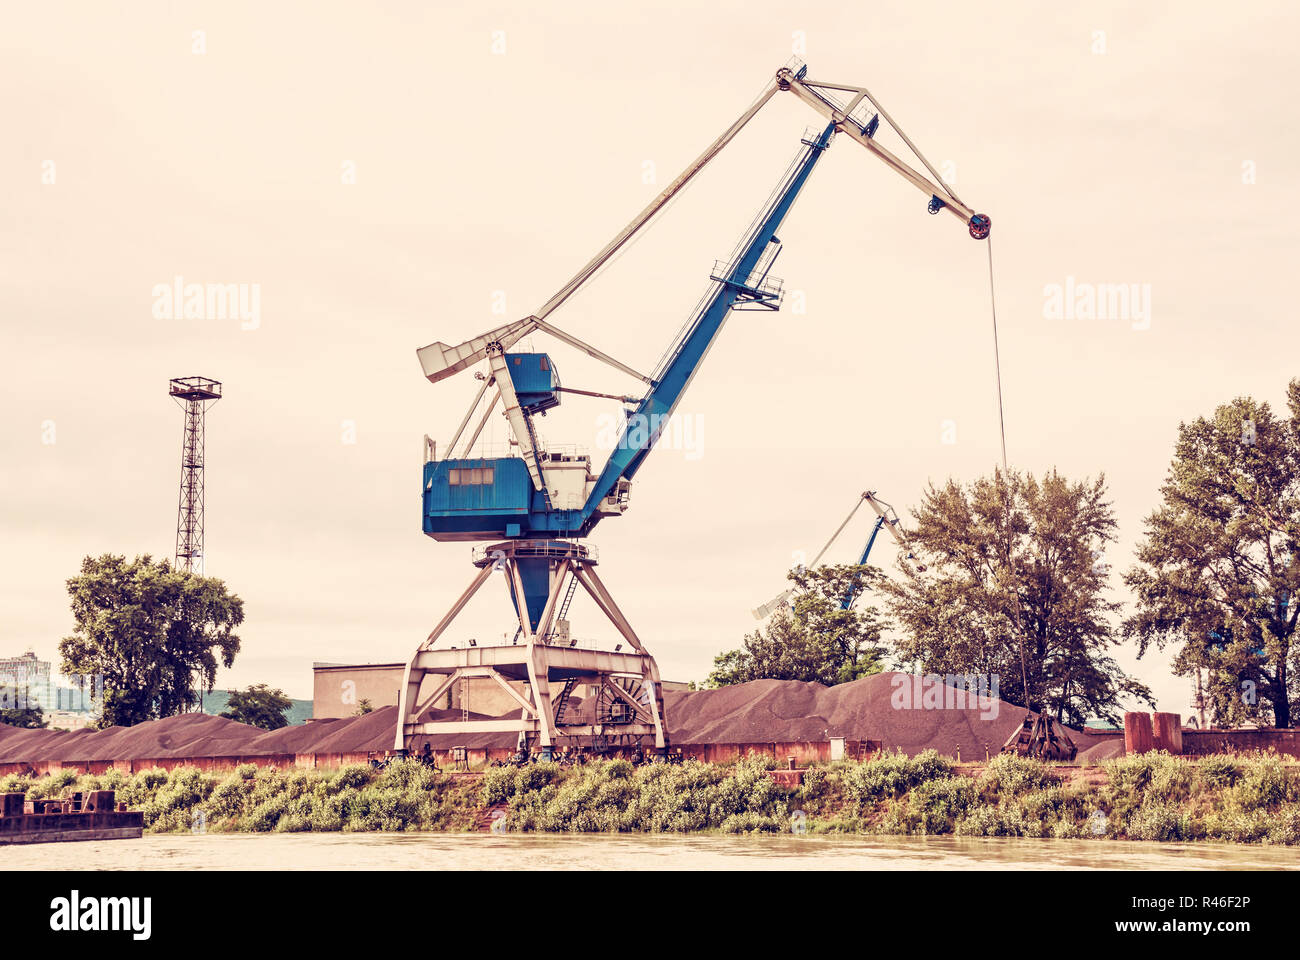 Blue crane in cargo port translating coal. Industrial scene. Red photo filter. Stock Photo